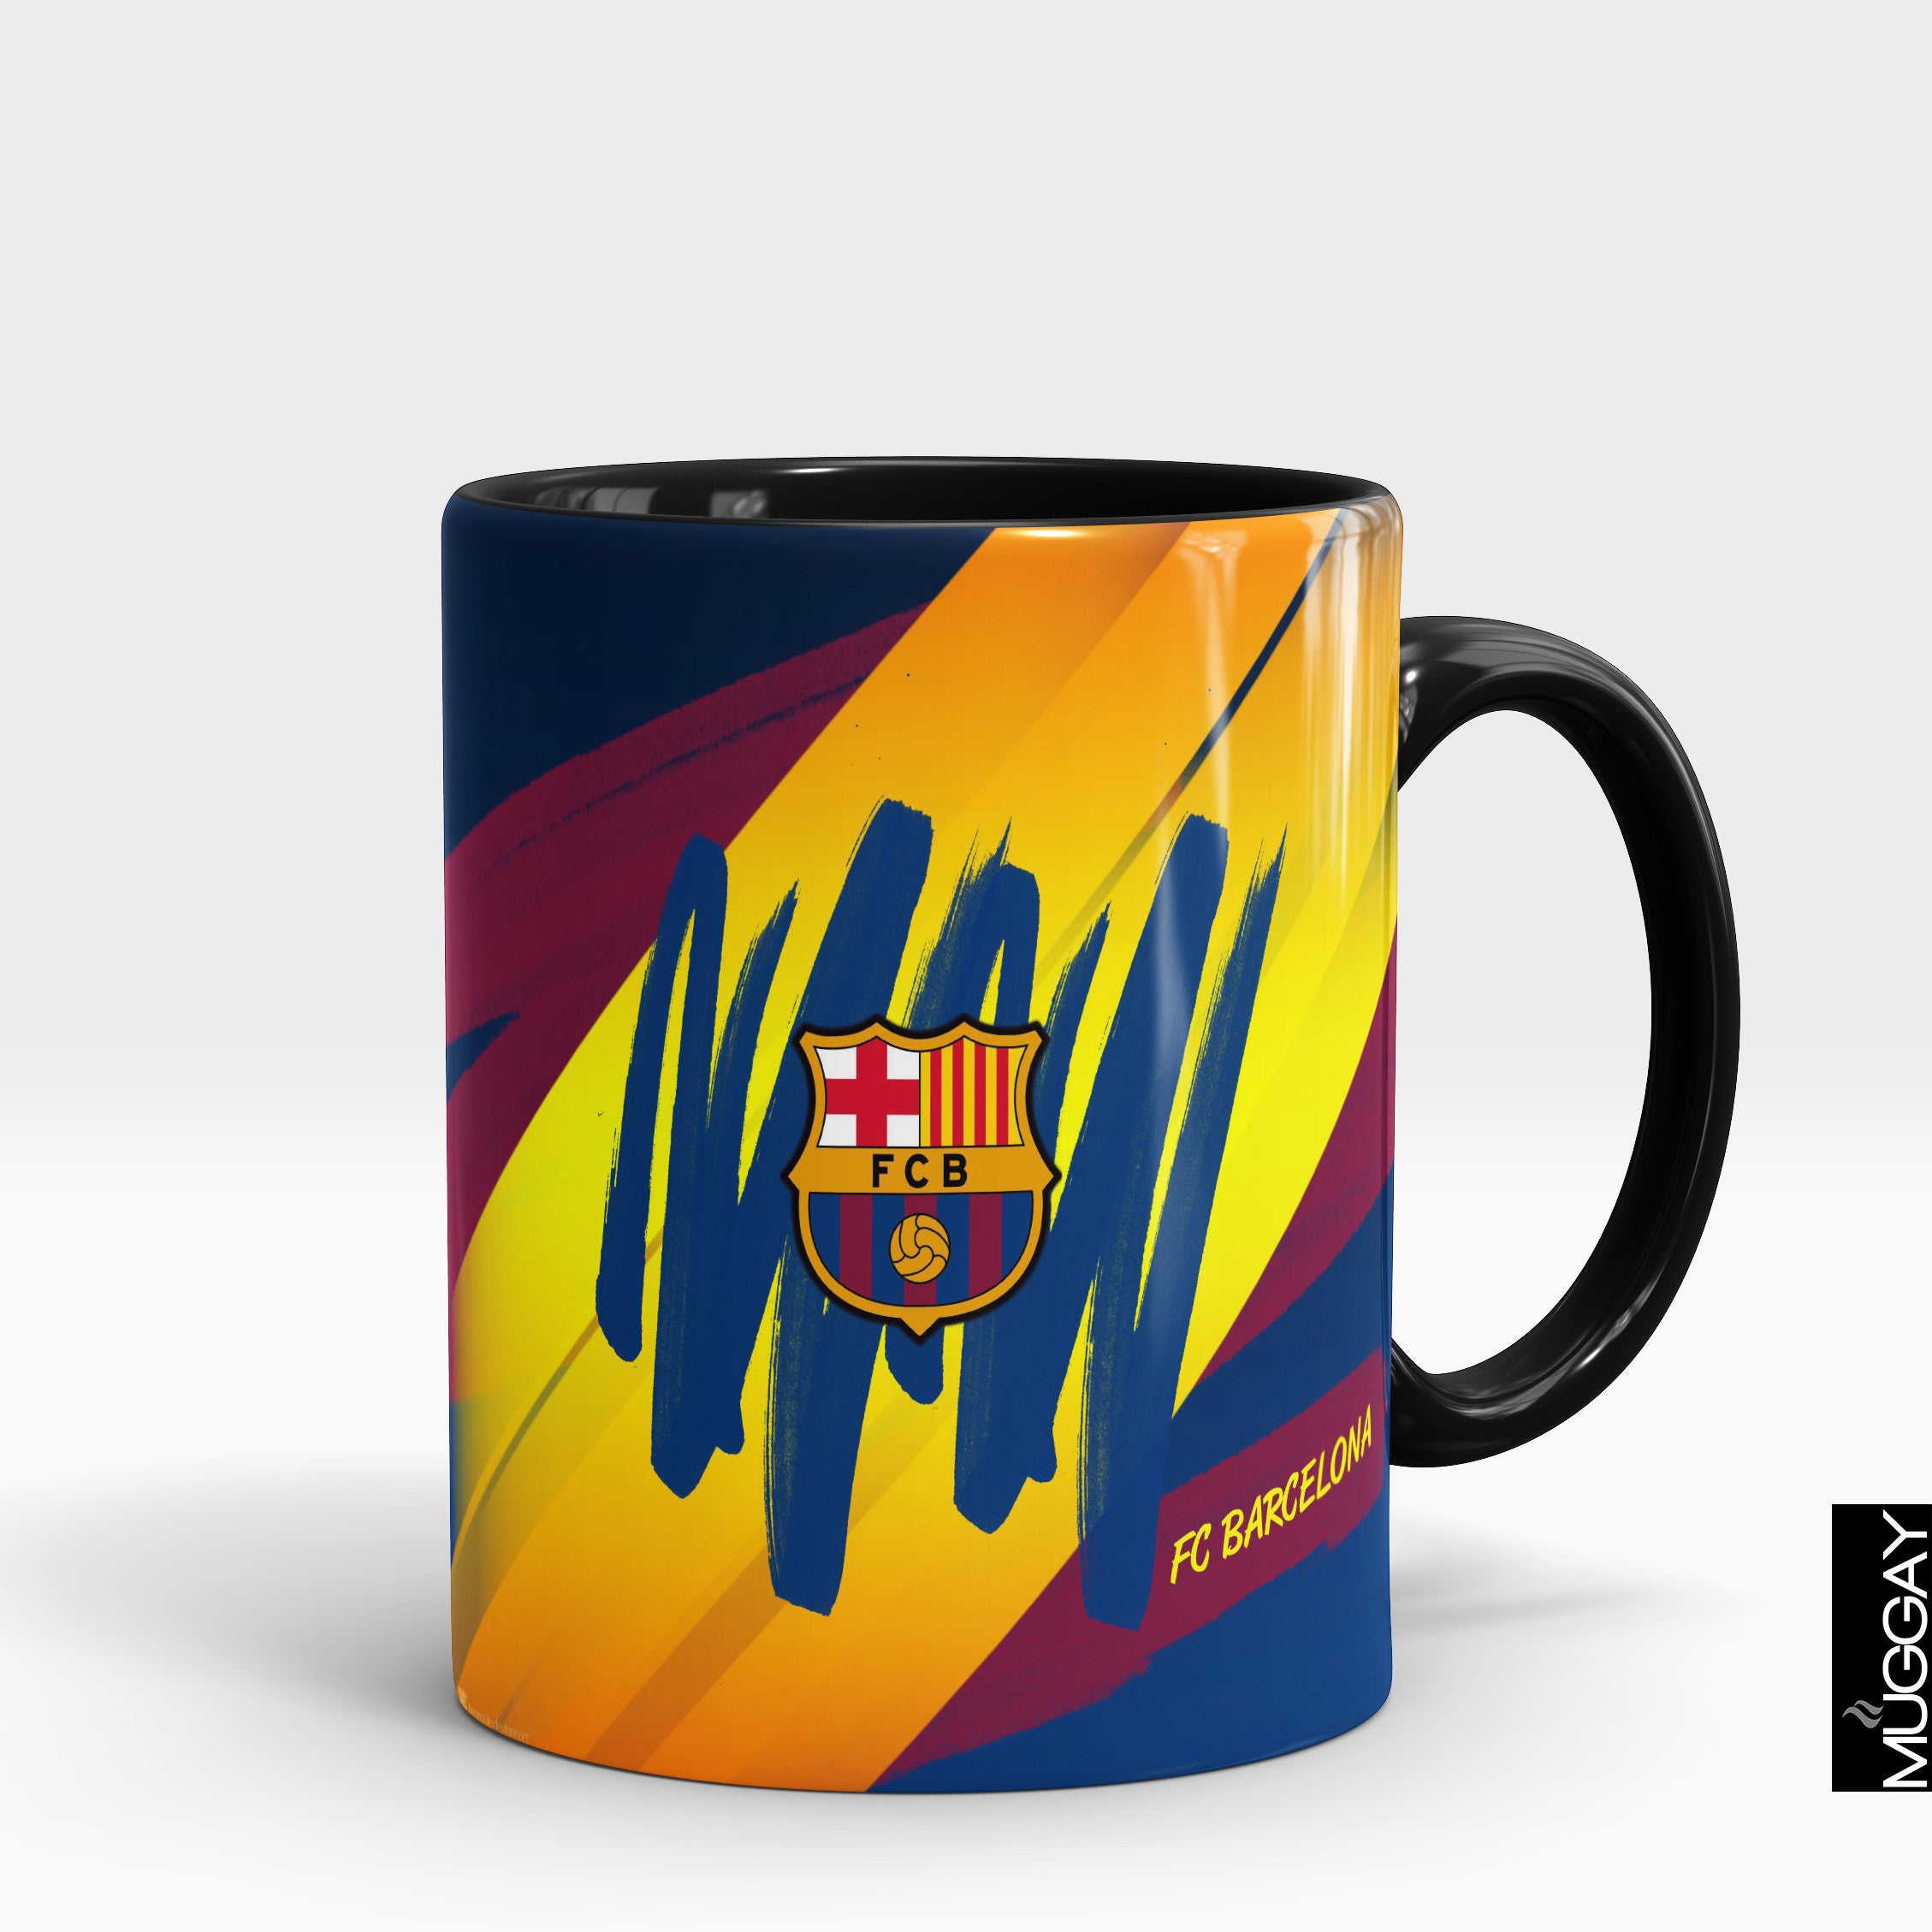 Football Theme mugs36